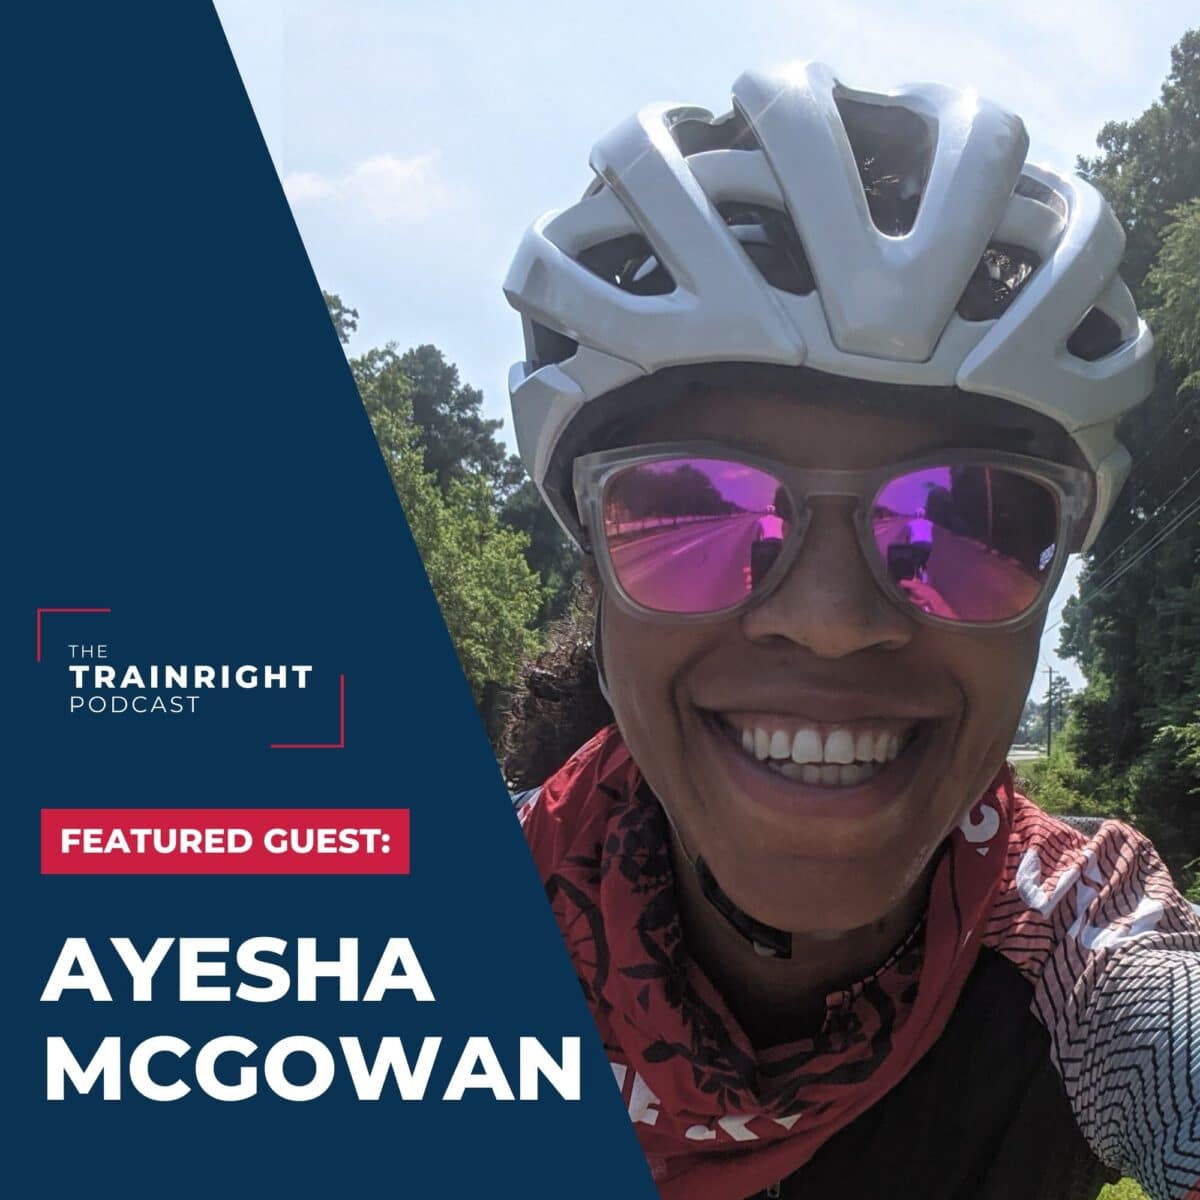 Ayesha McGowan cyclis